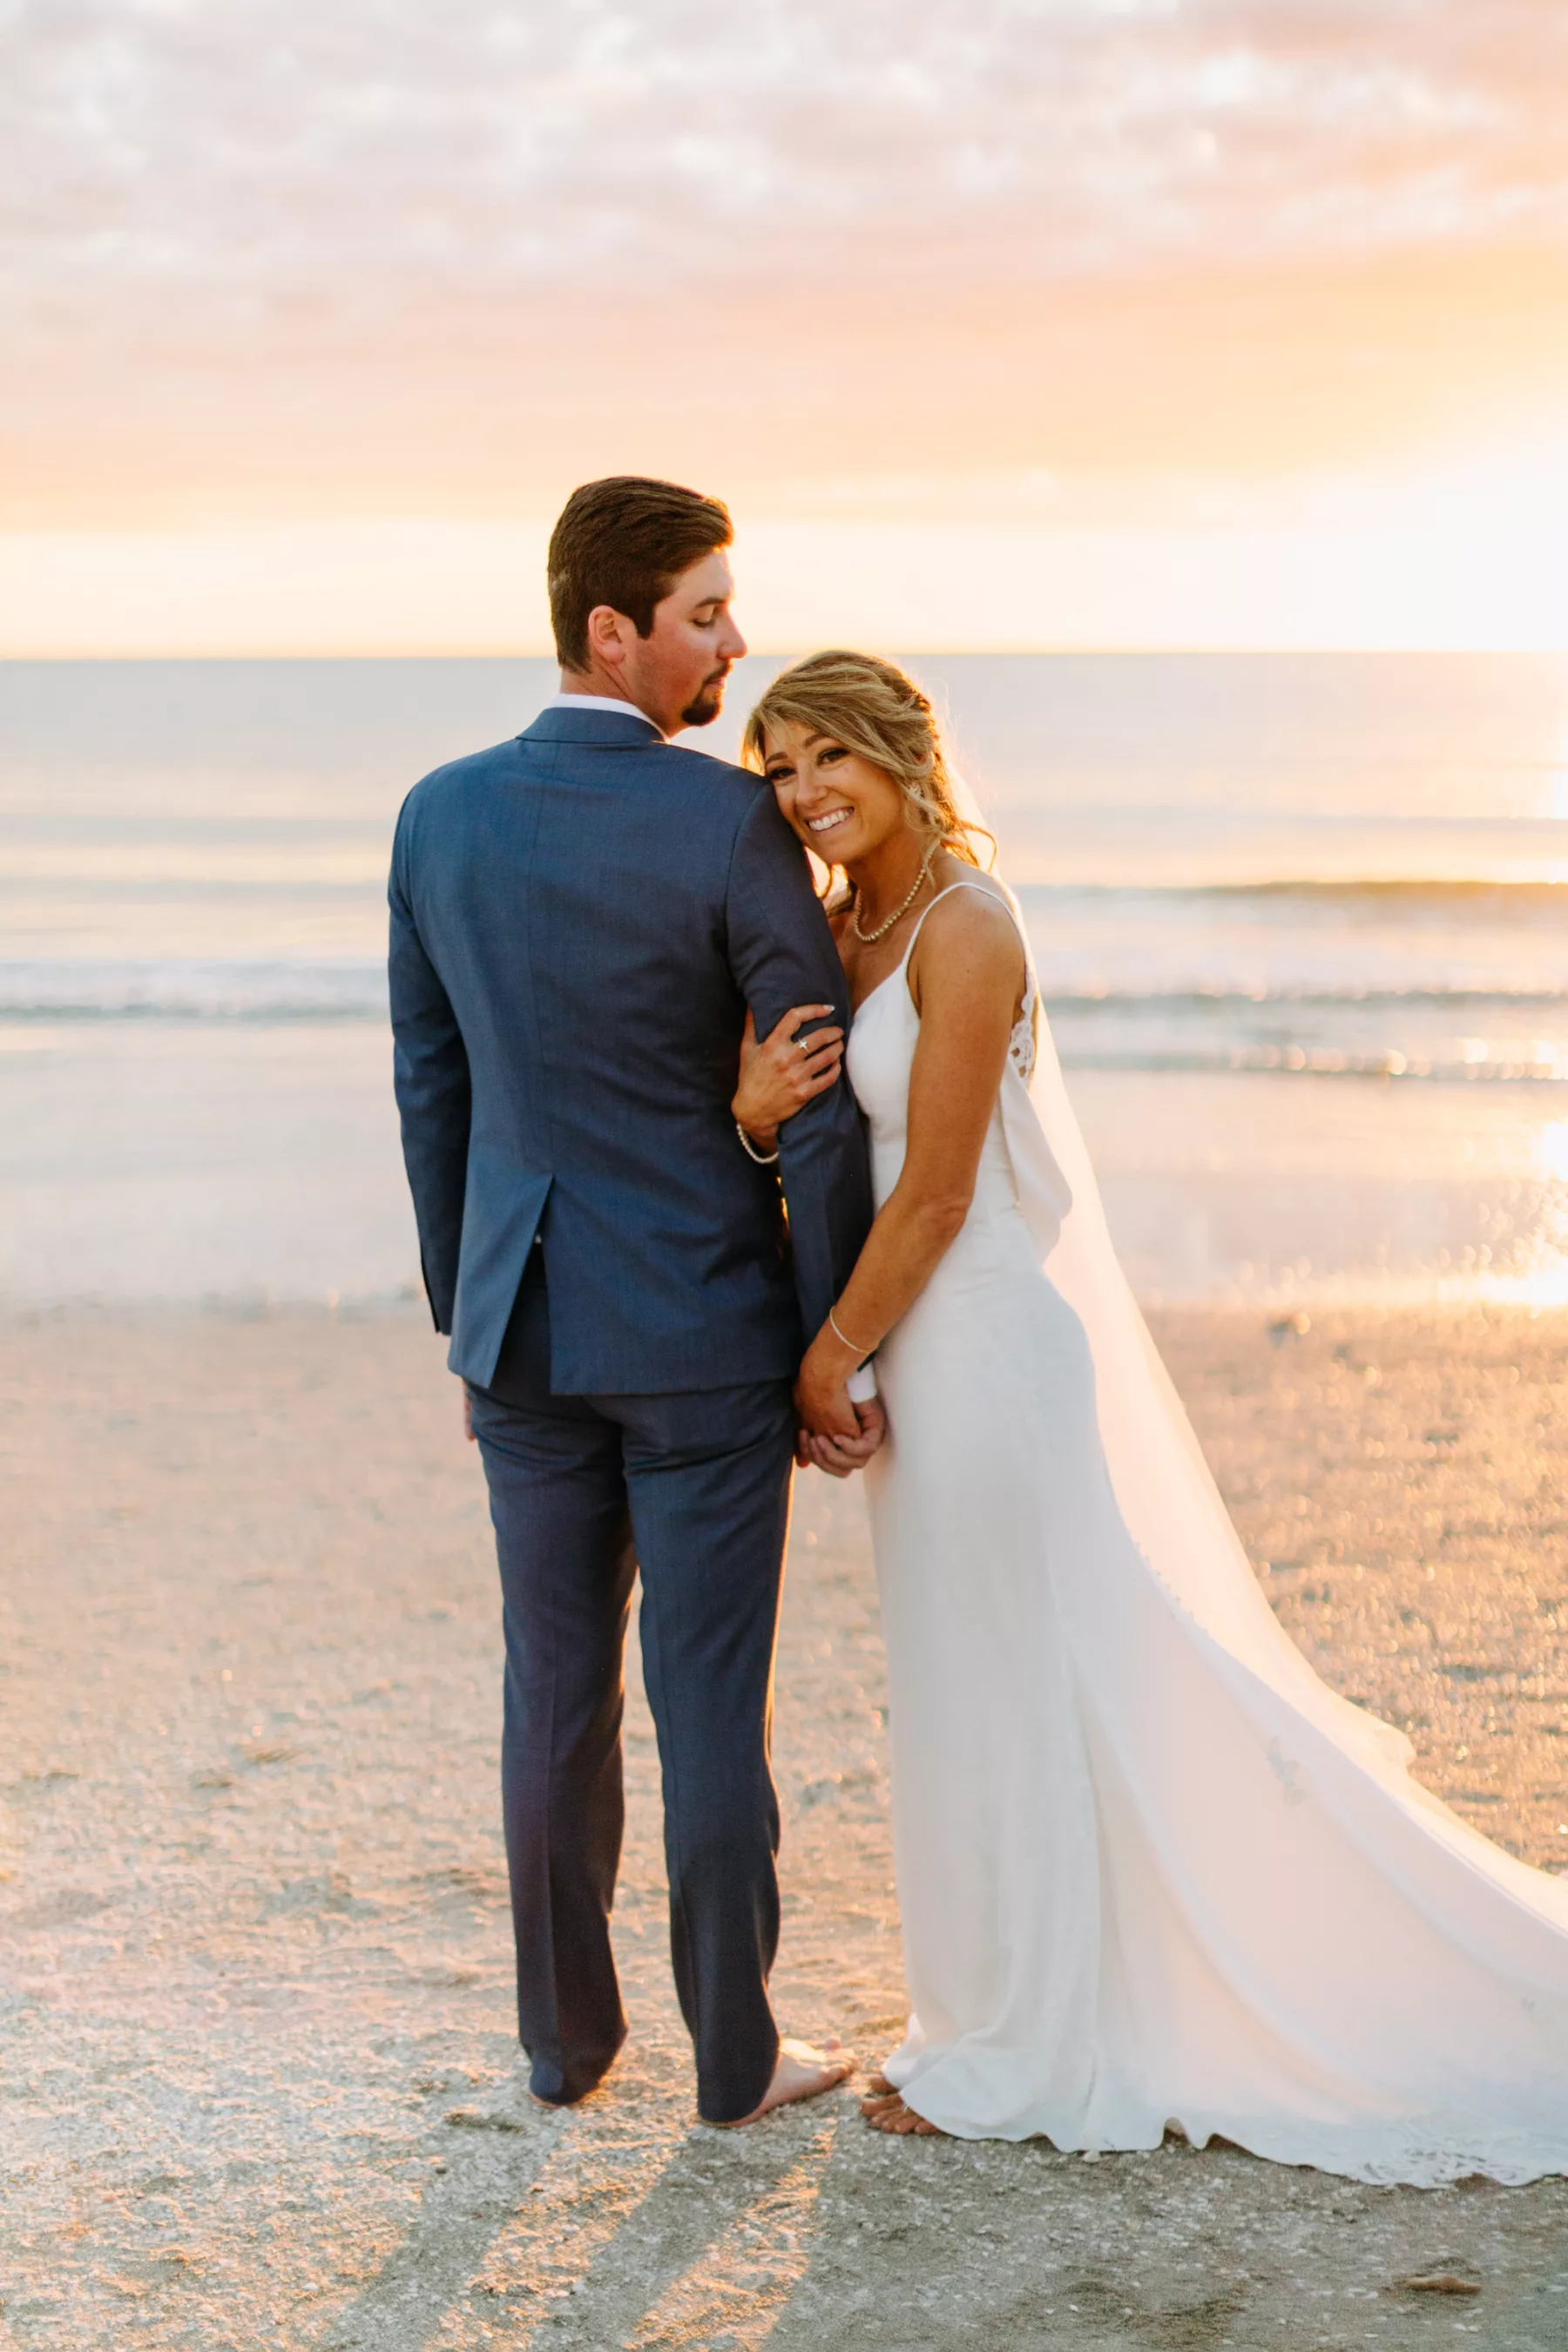 Romantic Bride and Groom Sunset Beach Wedding Portrait | Tampa Bay Photographer Amber McWhorter Photography | Maderia Beach Videographer Priceless Studio Design